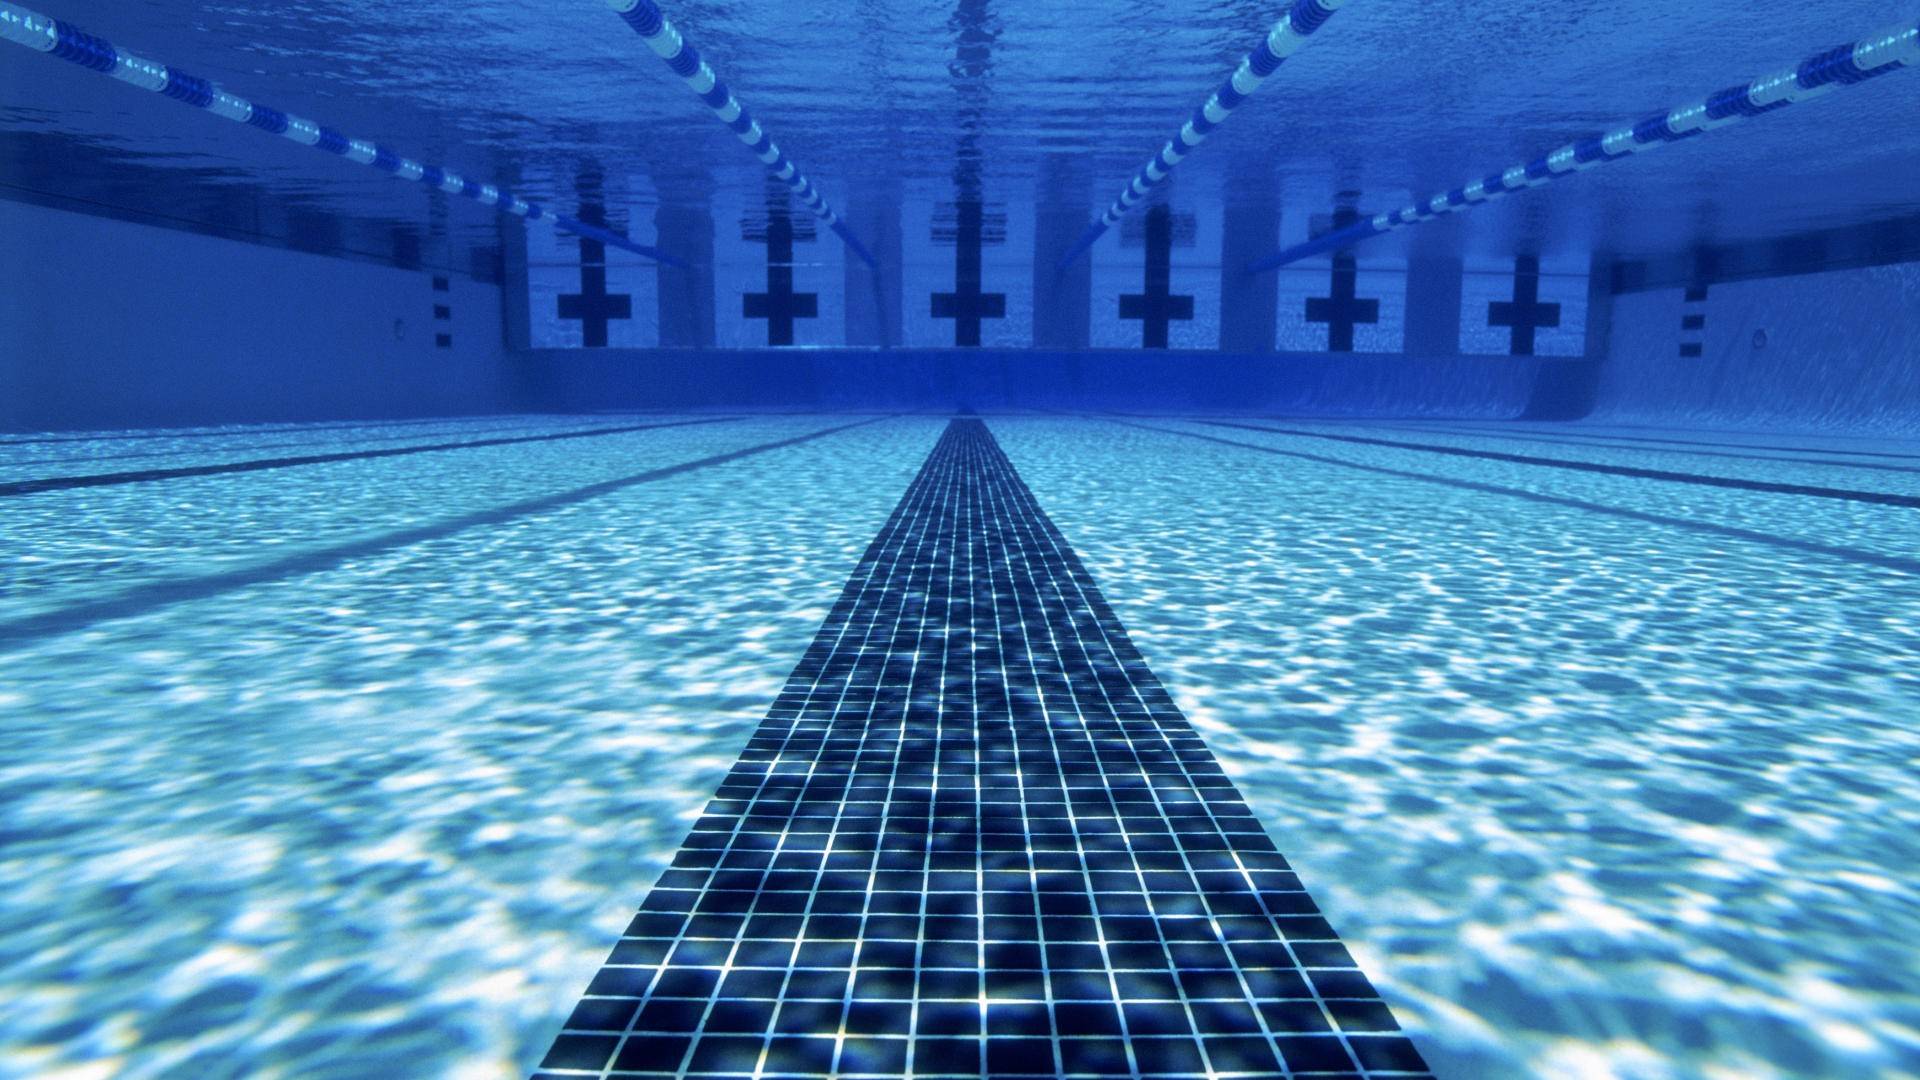 Swimming Background